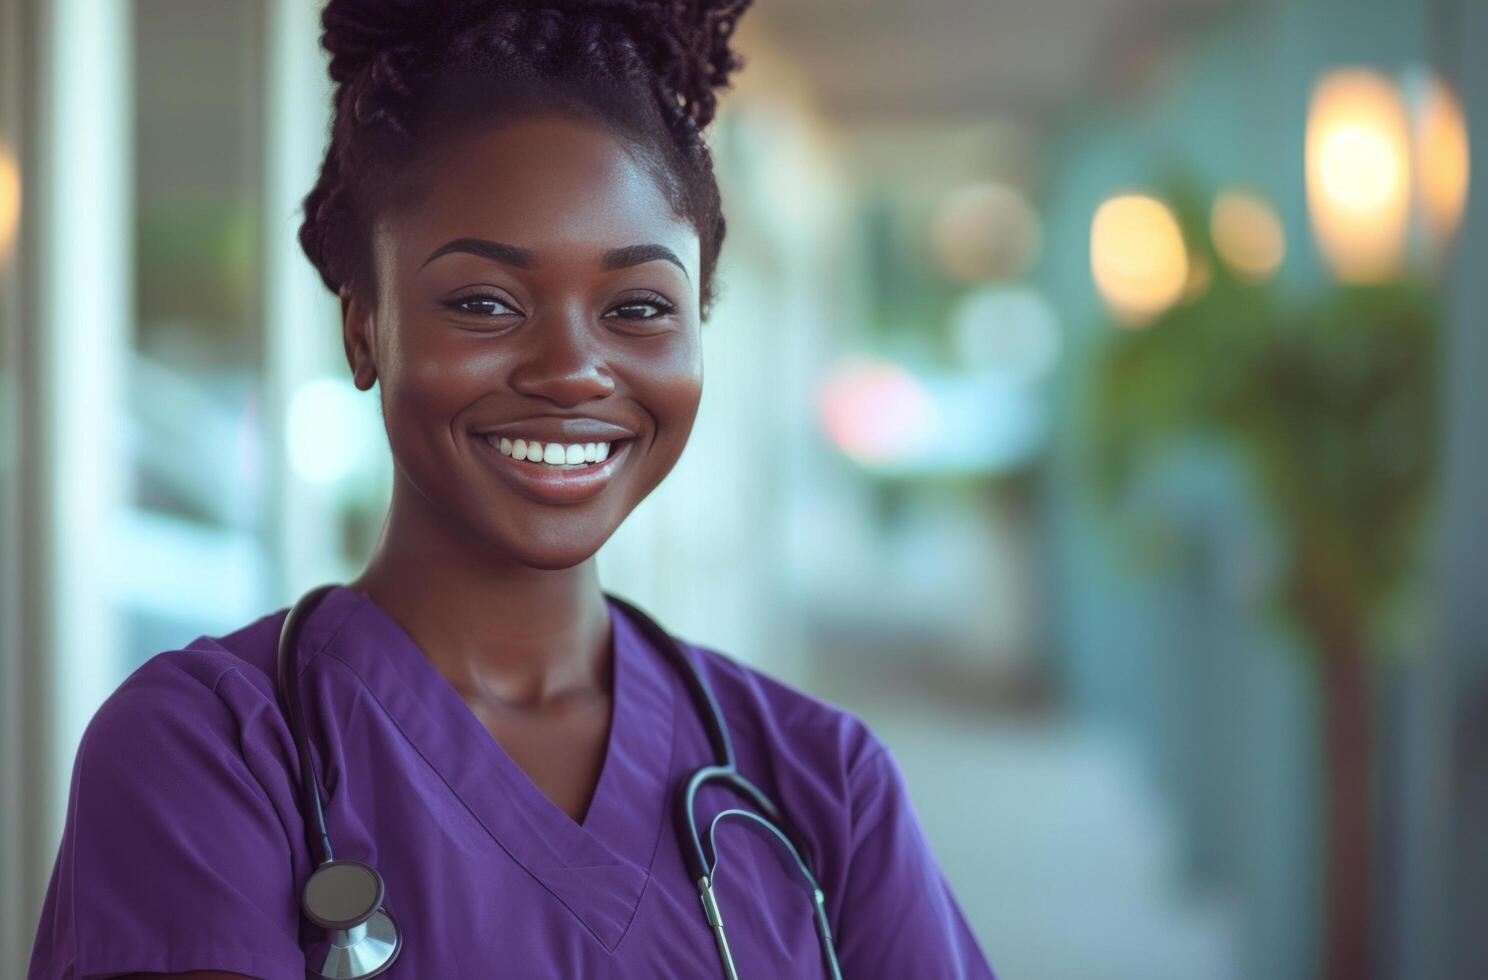 AI generated a nurse in a purple uniform standing portrait photo